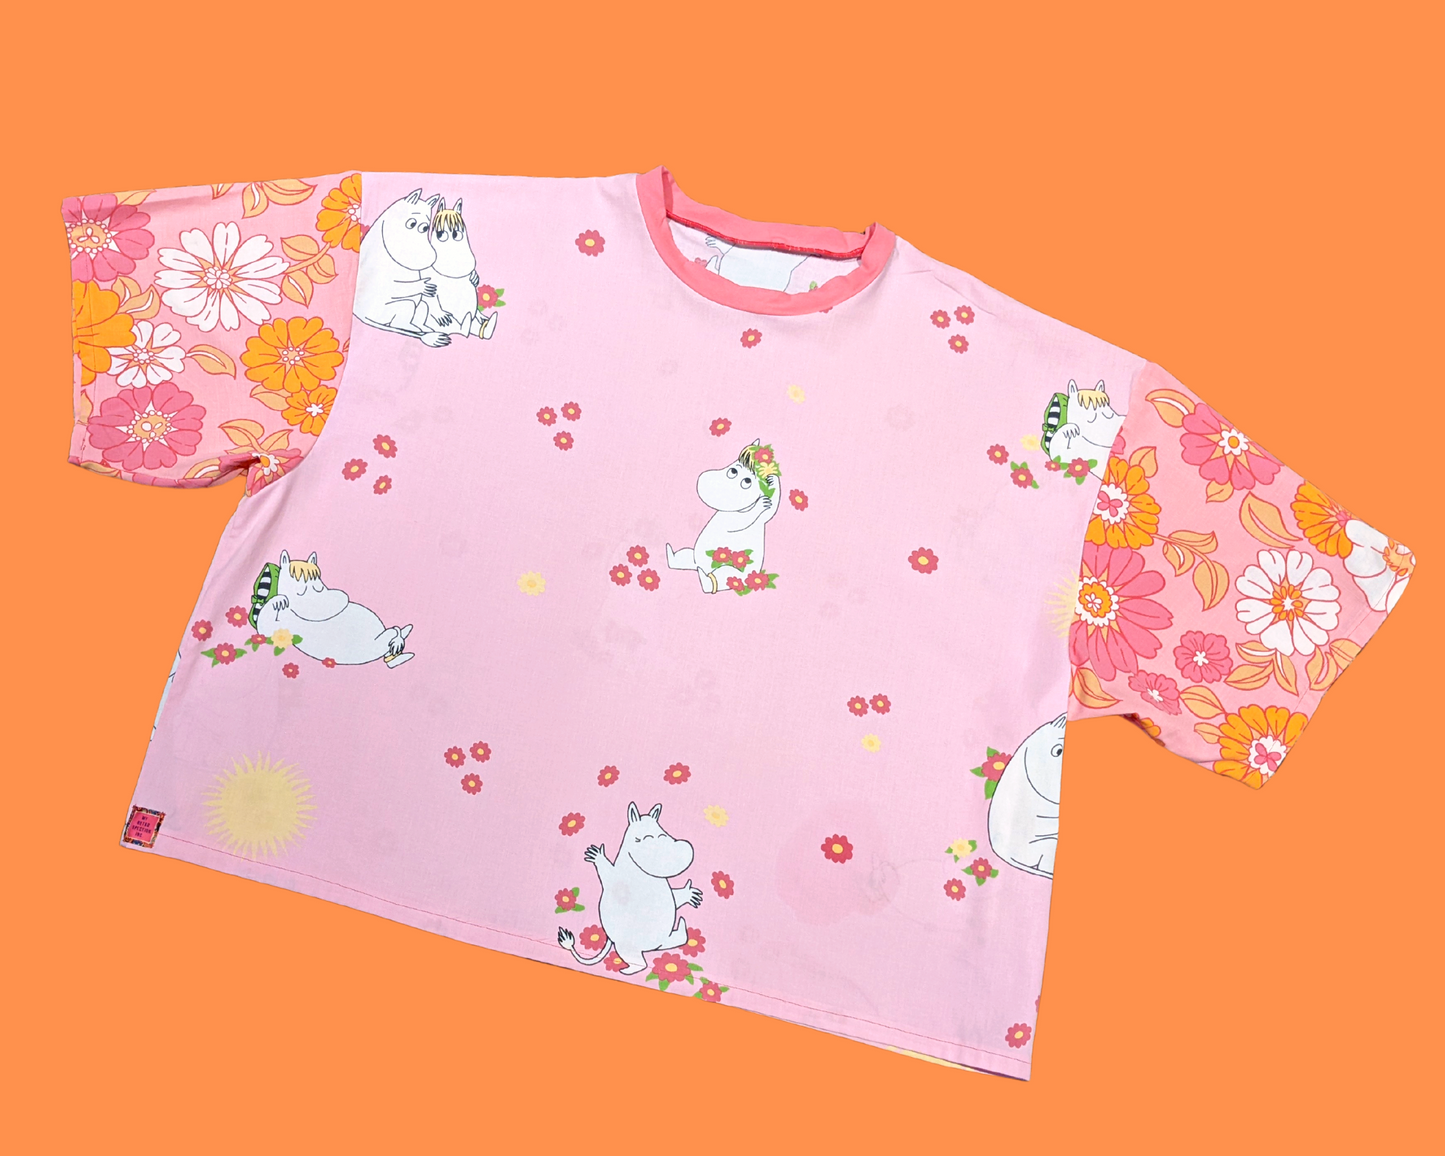 Fait à la main, Upcycled The Moomins Vintage 1990's Bedsheet + Orange et Rose Floral Fabric T-Shirt Oversized XL